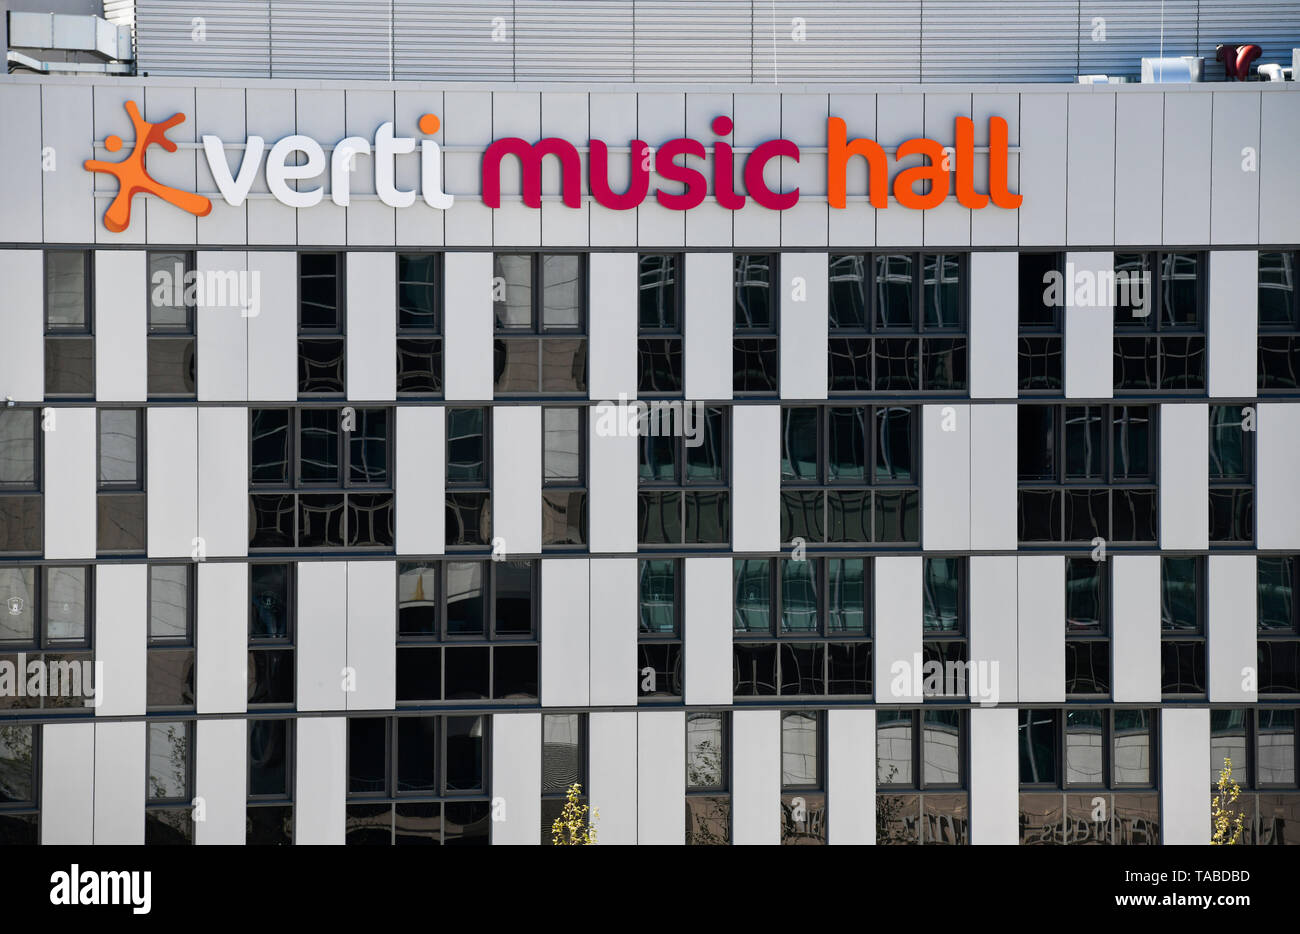 Verti Musik klang, Mercedes, Friedrich Grove, Berlin, Deutschland, Verti Music Hall, Mercedes-Platz, Friedrichshain, Deutschland Stockfoto